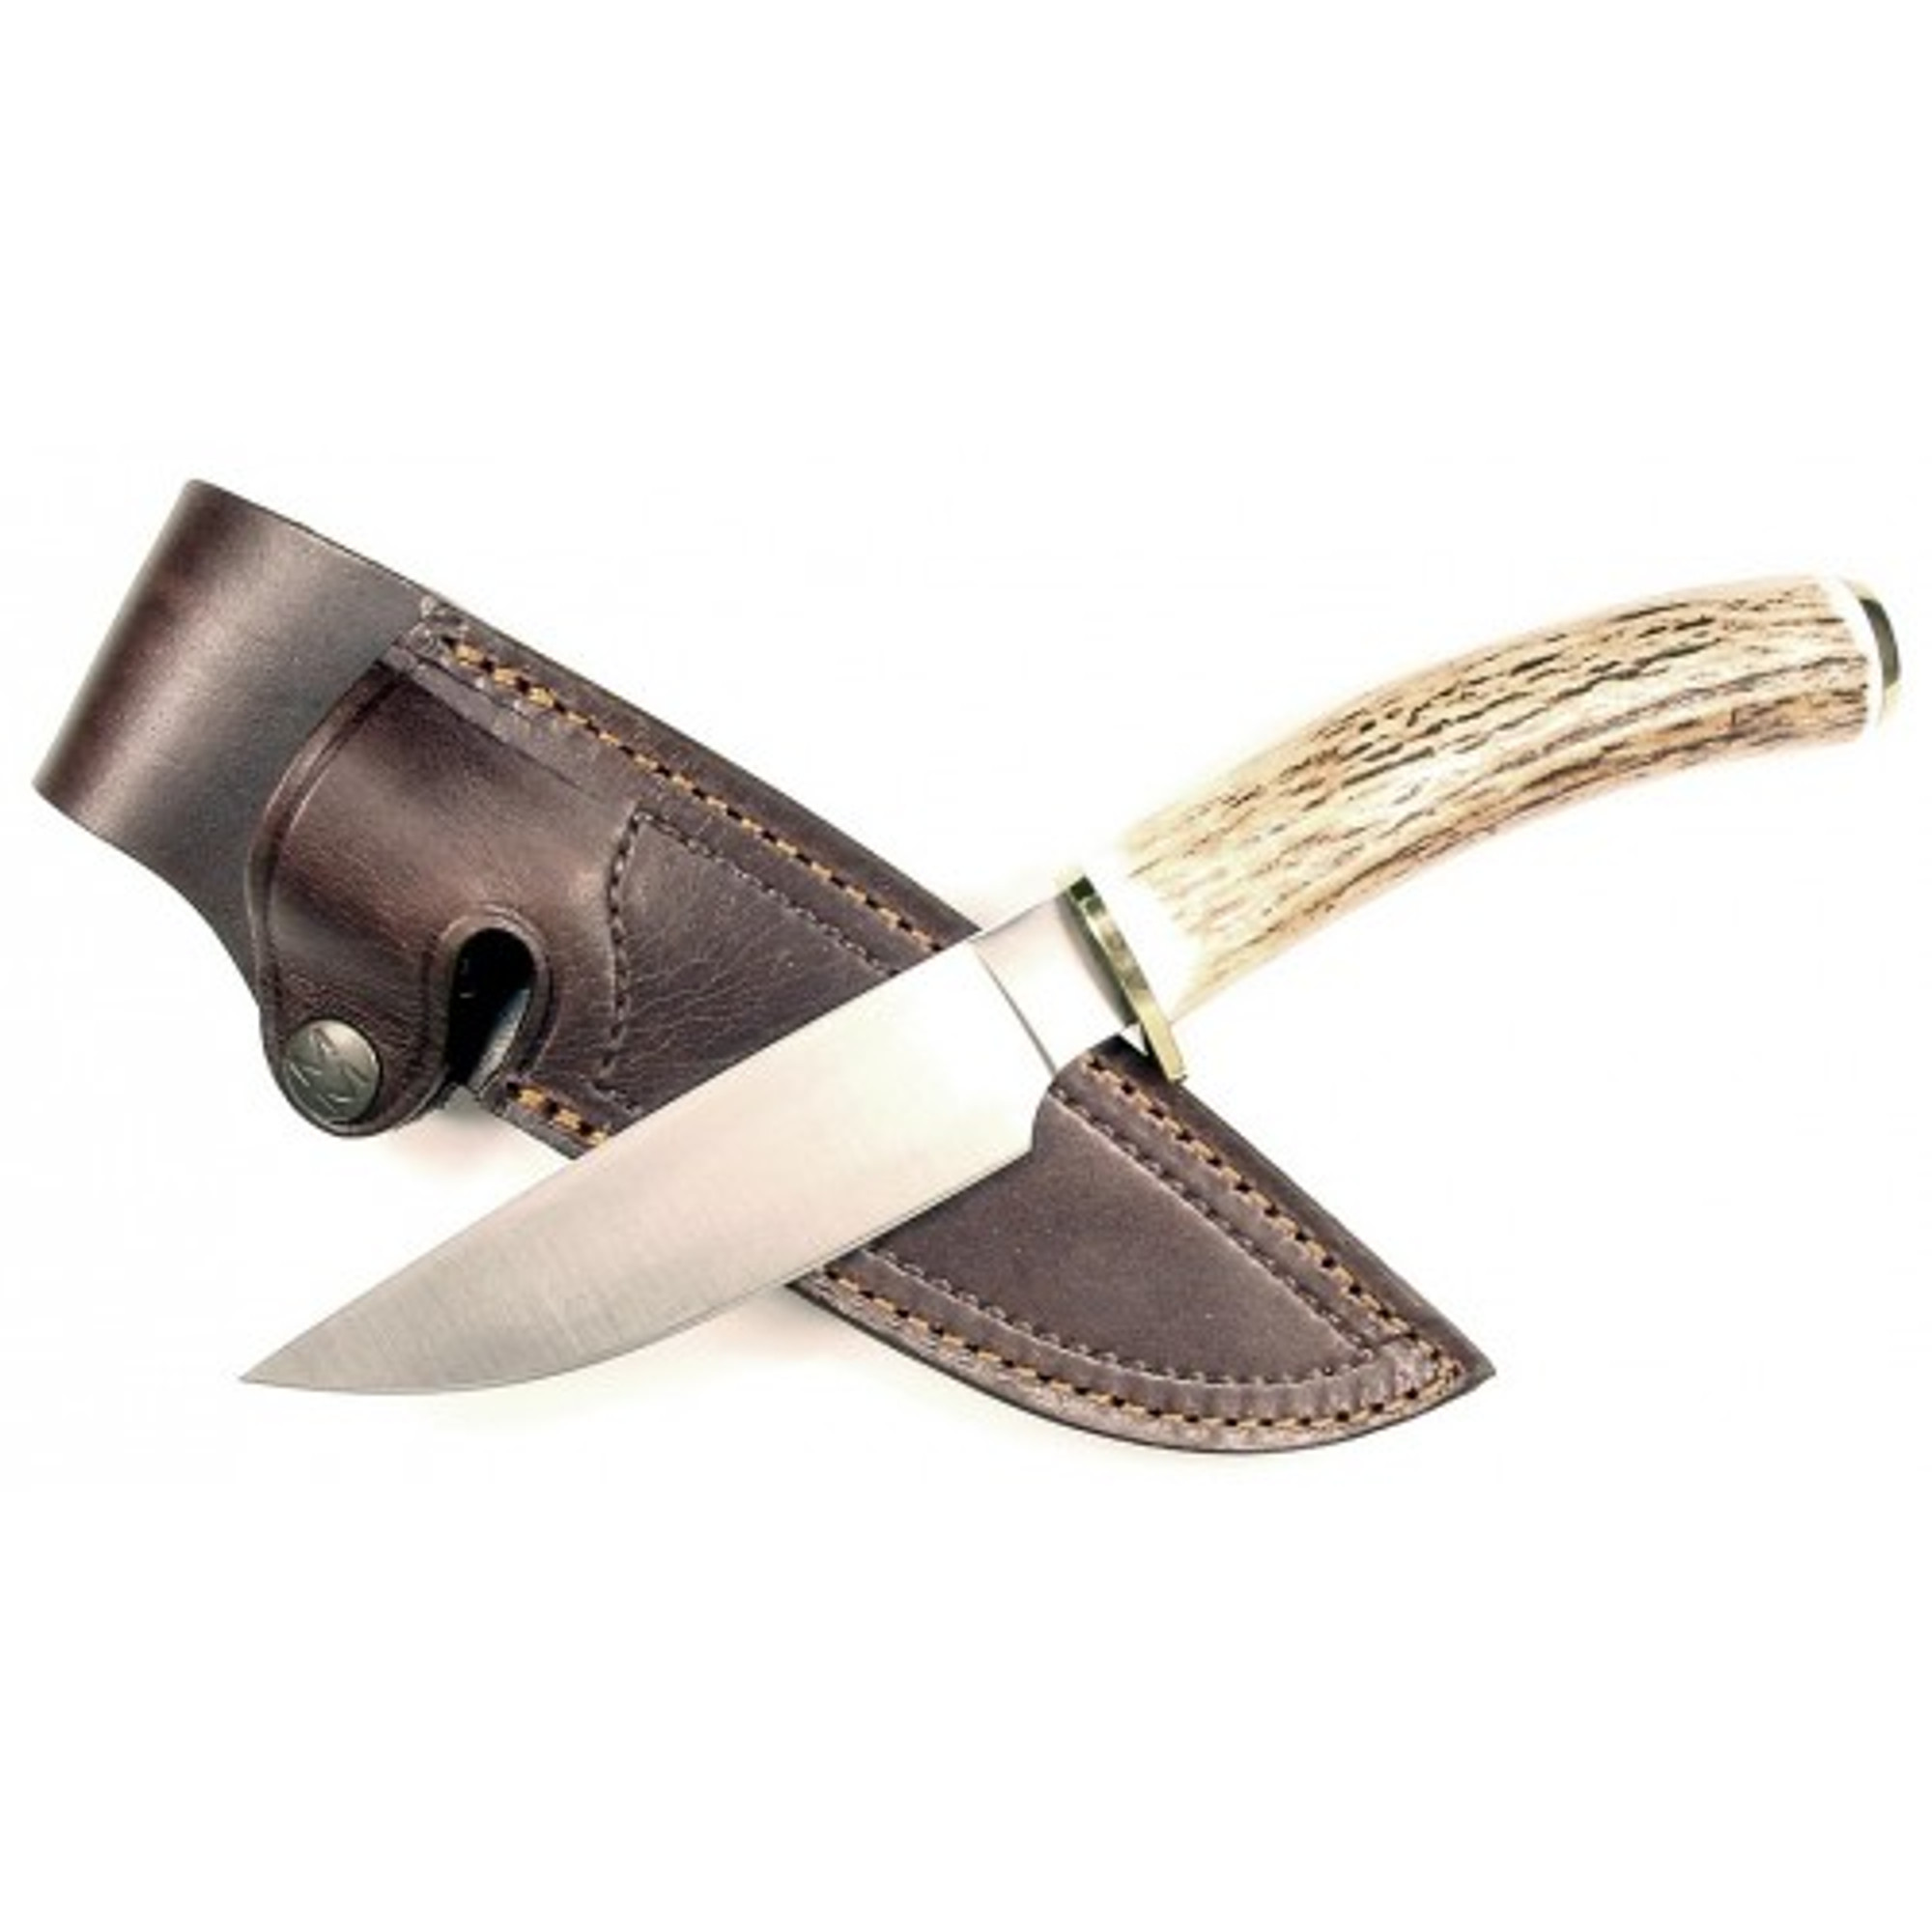 RUKO RUK0037, X50CrMoV15, 4-3/4" Fixed Blade Hunting Knife, Deer Horn Handle